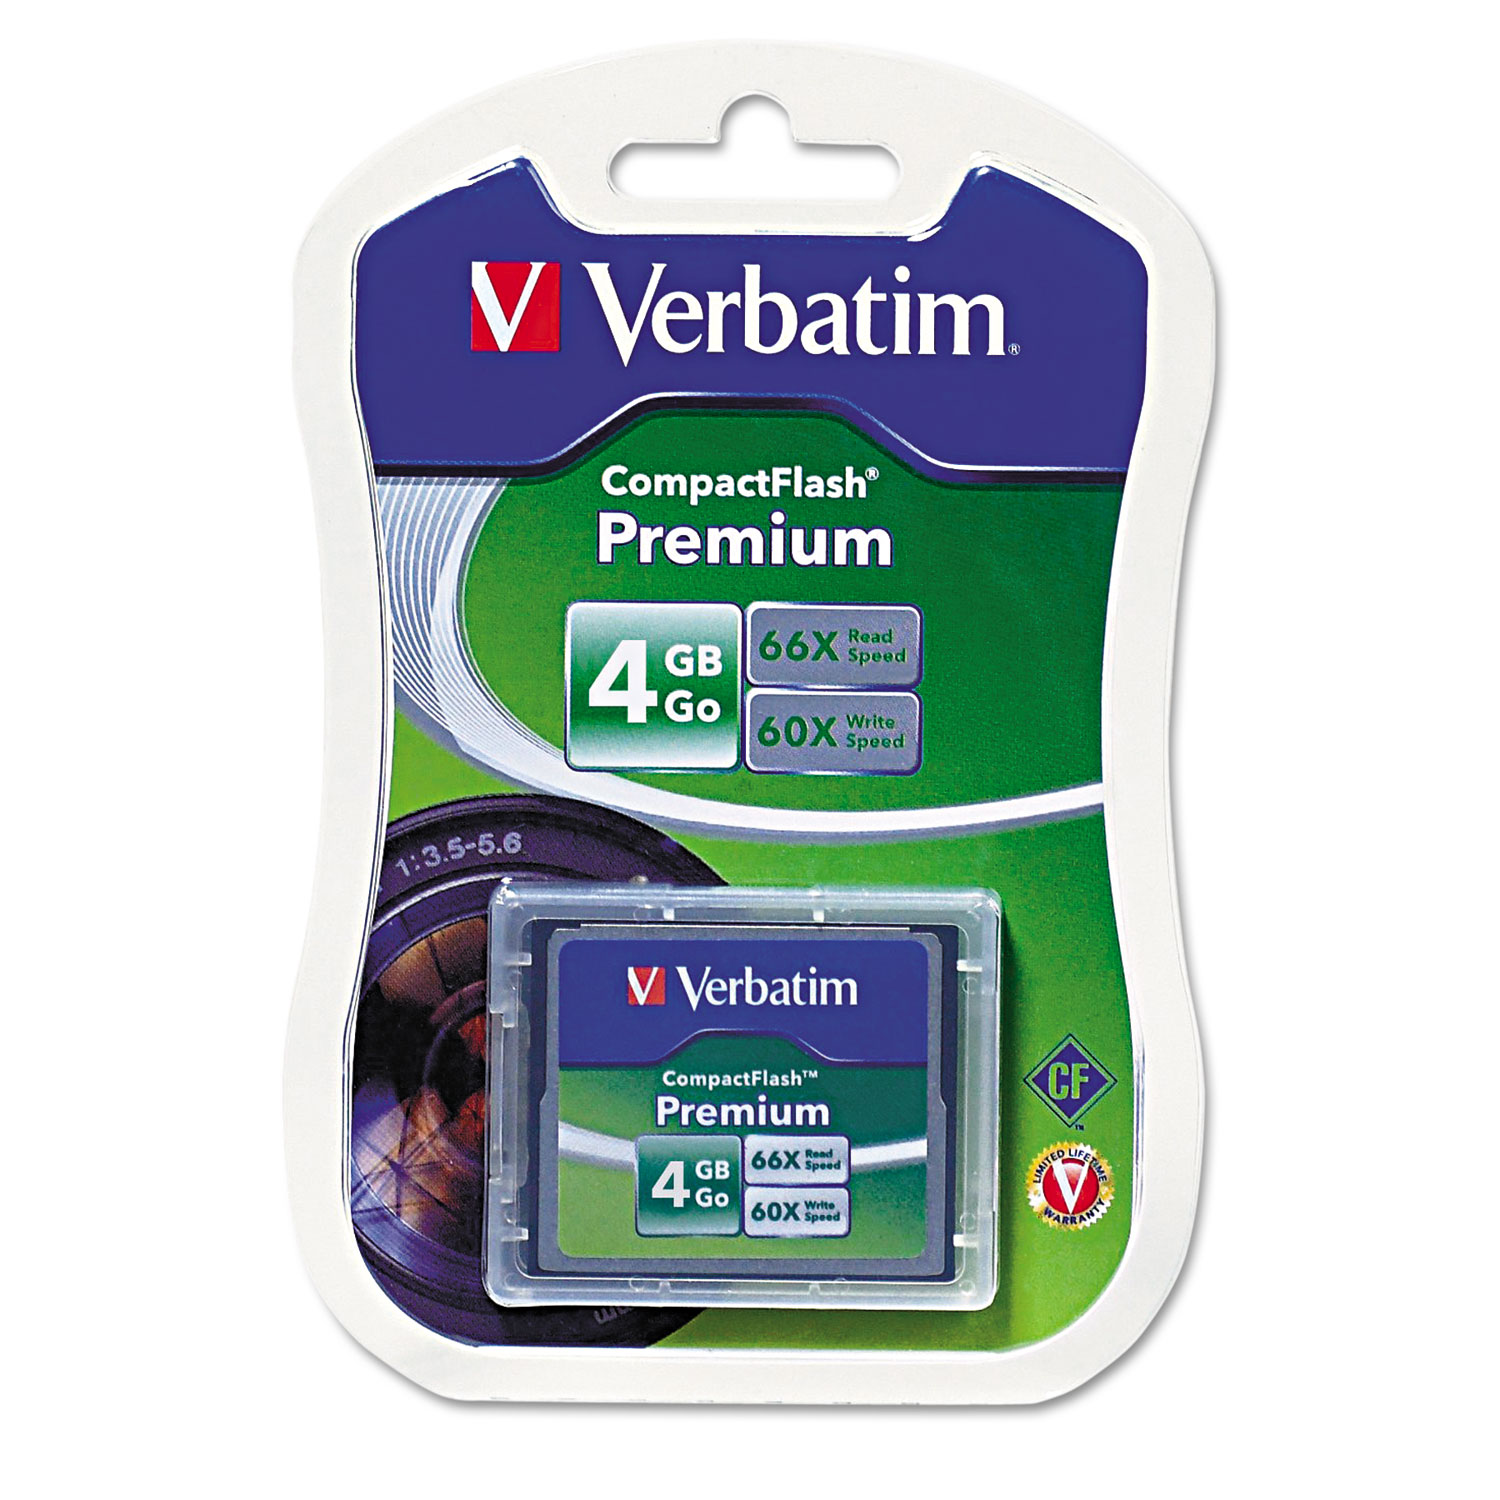 Premium CompactFlash Memory Card, 4GB, 66X Read Speed/60X Write Speed